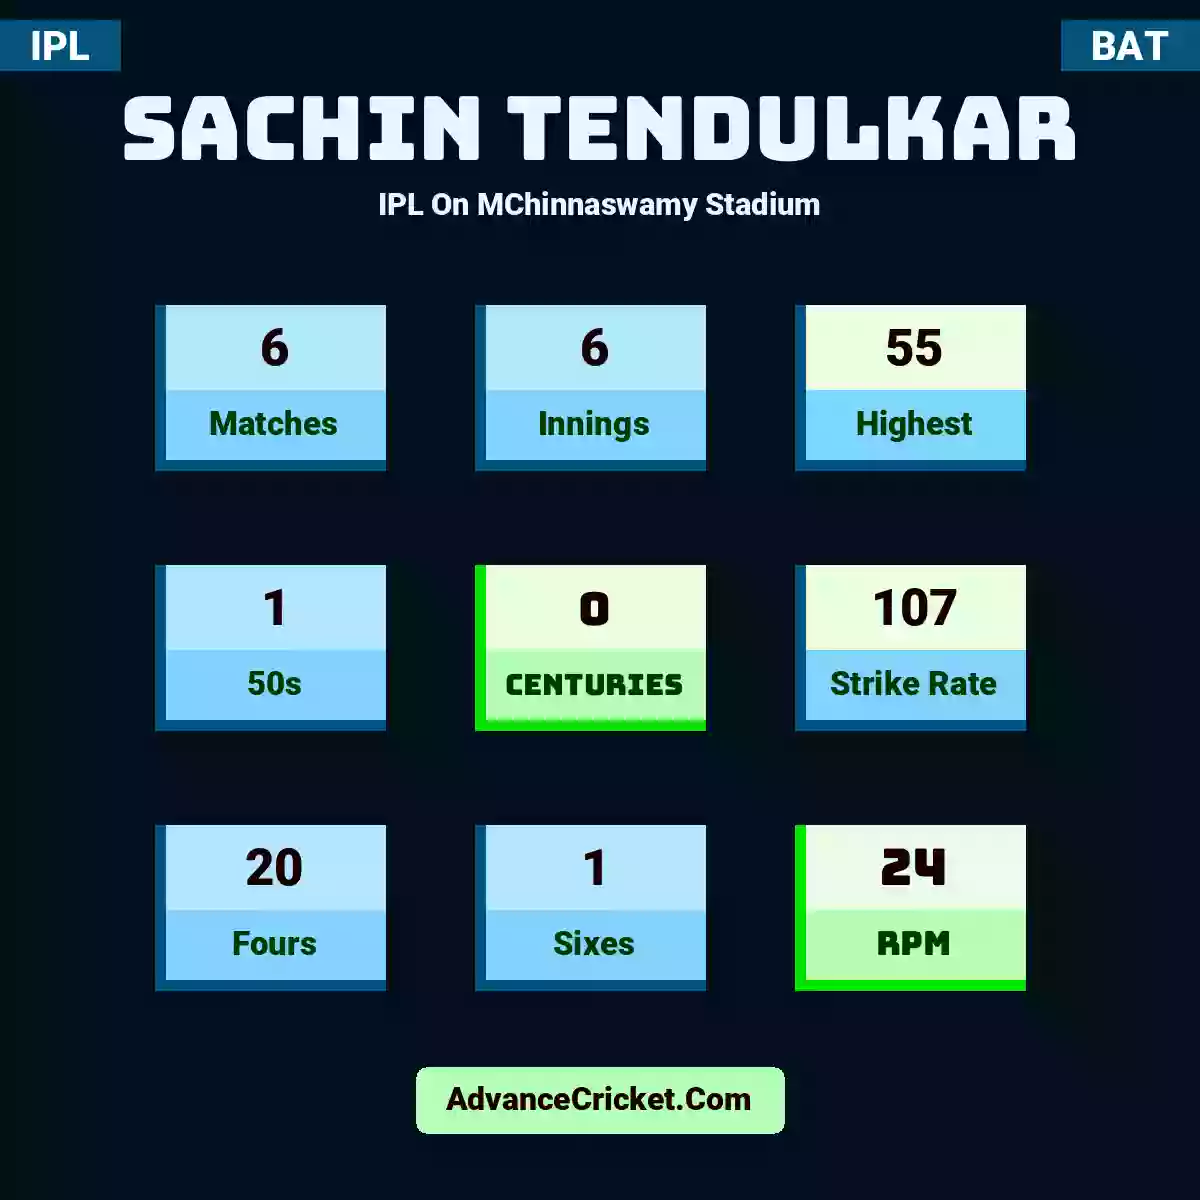 Sachin Tendulkar IPL  On MChinnaswamy Stadium, Sachin Tendulkar played 6 matches, scored 55 runs as highest, 1 half-centuries, and 0 centuries, with a strike rate of 107. S.Tendulkar hit 20 fours and 1 sixes, with an RPM of 24.